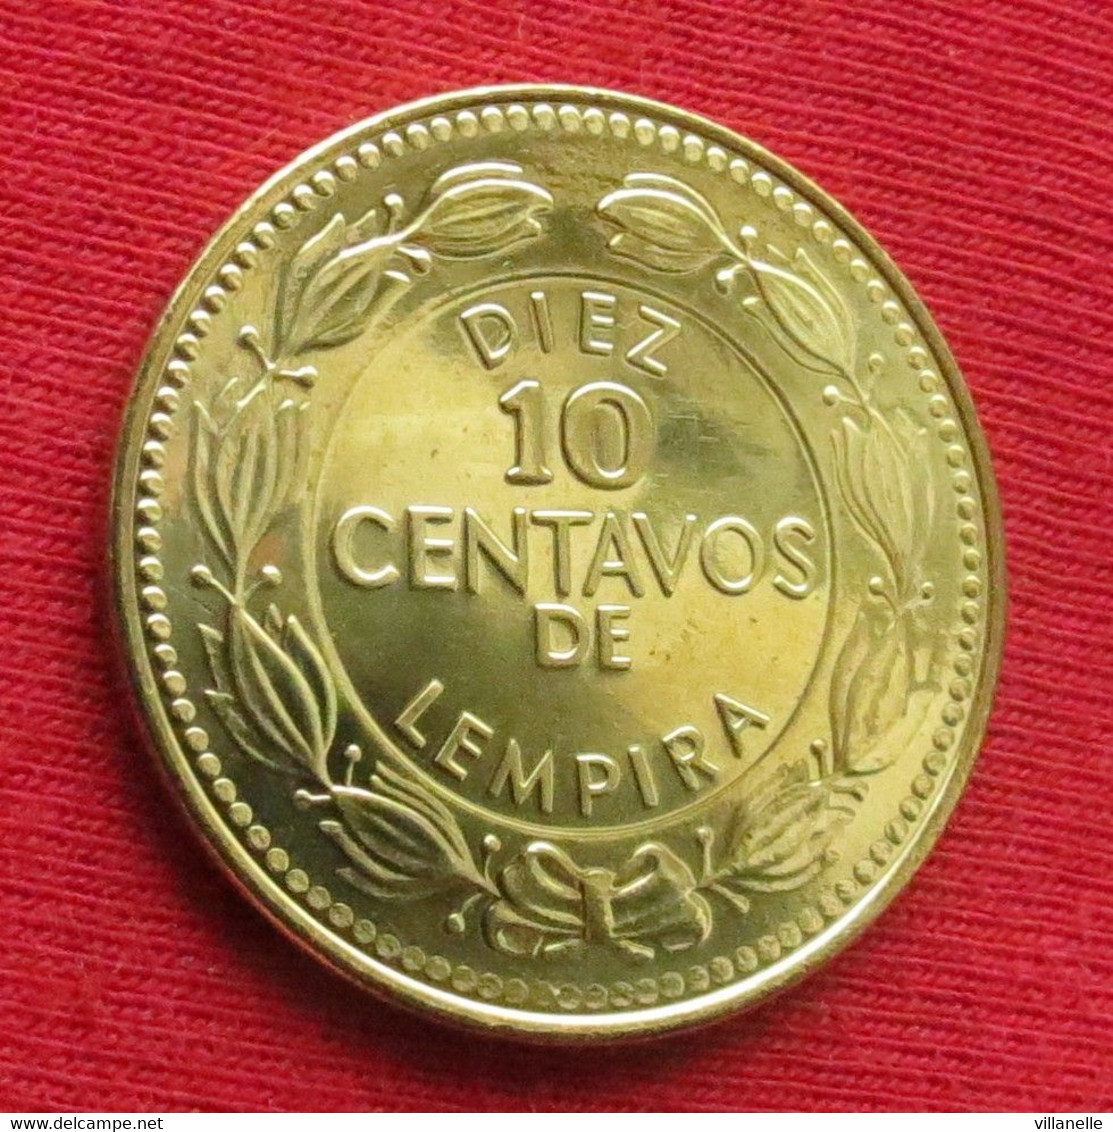 Honduras 10 Centavos 2006  UNC ºº - Honduras